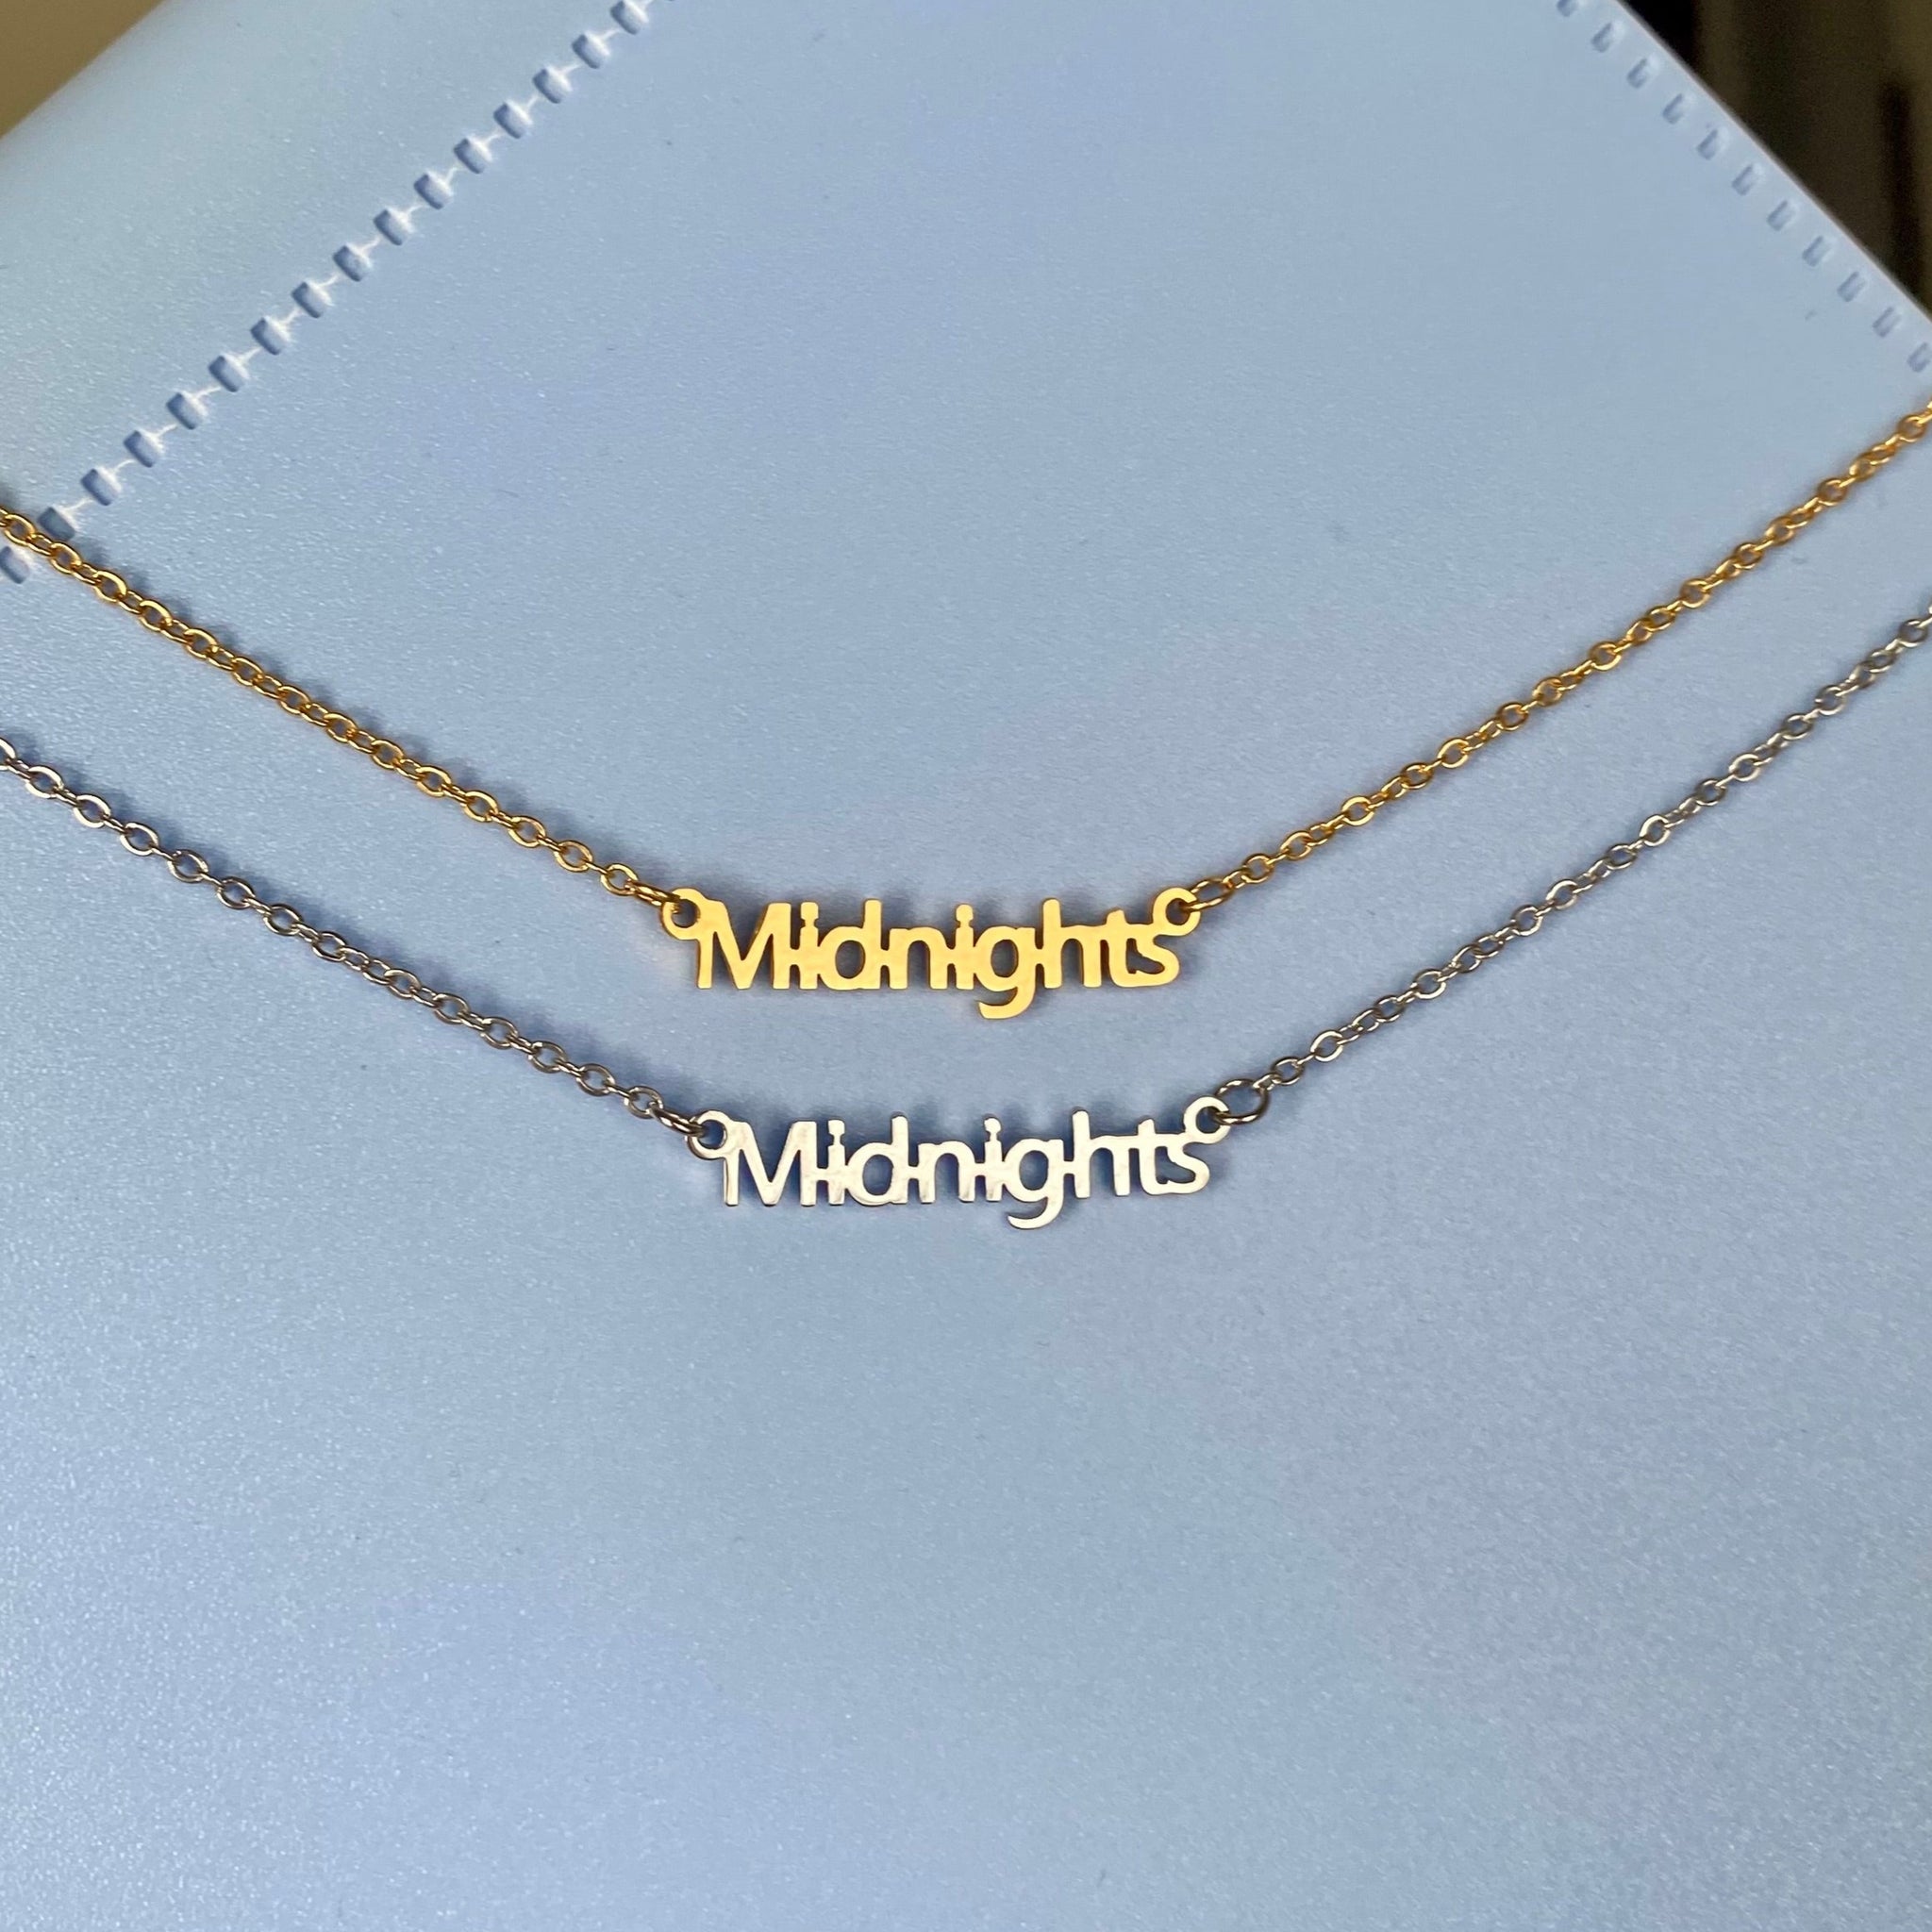 Midnights Necklace